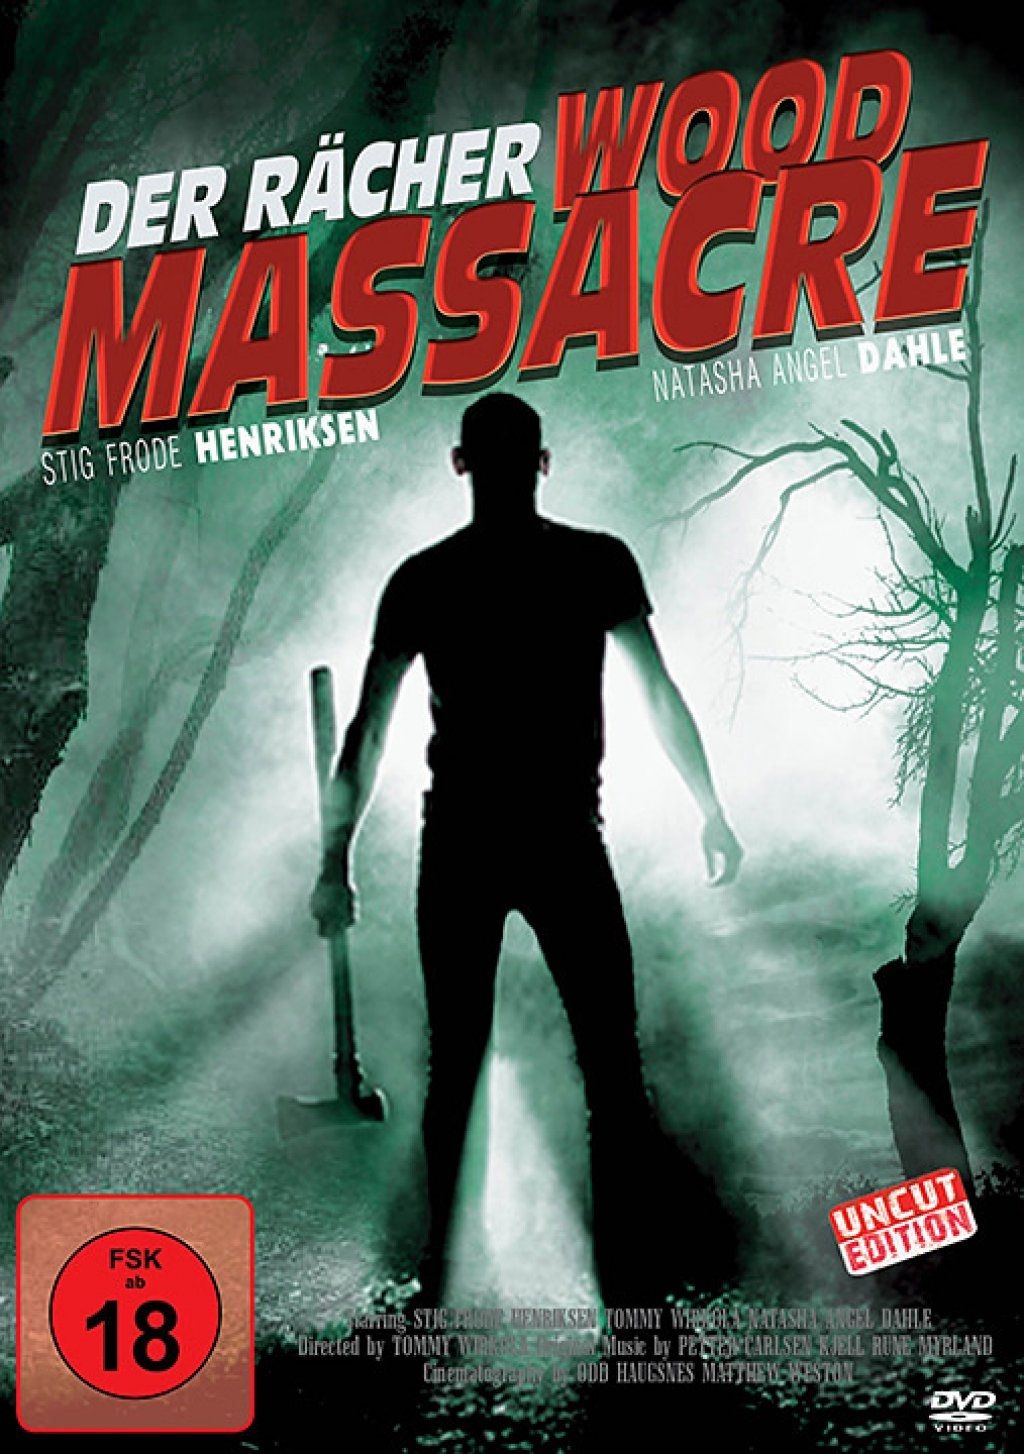 Wood Massacre - Der Rächer